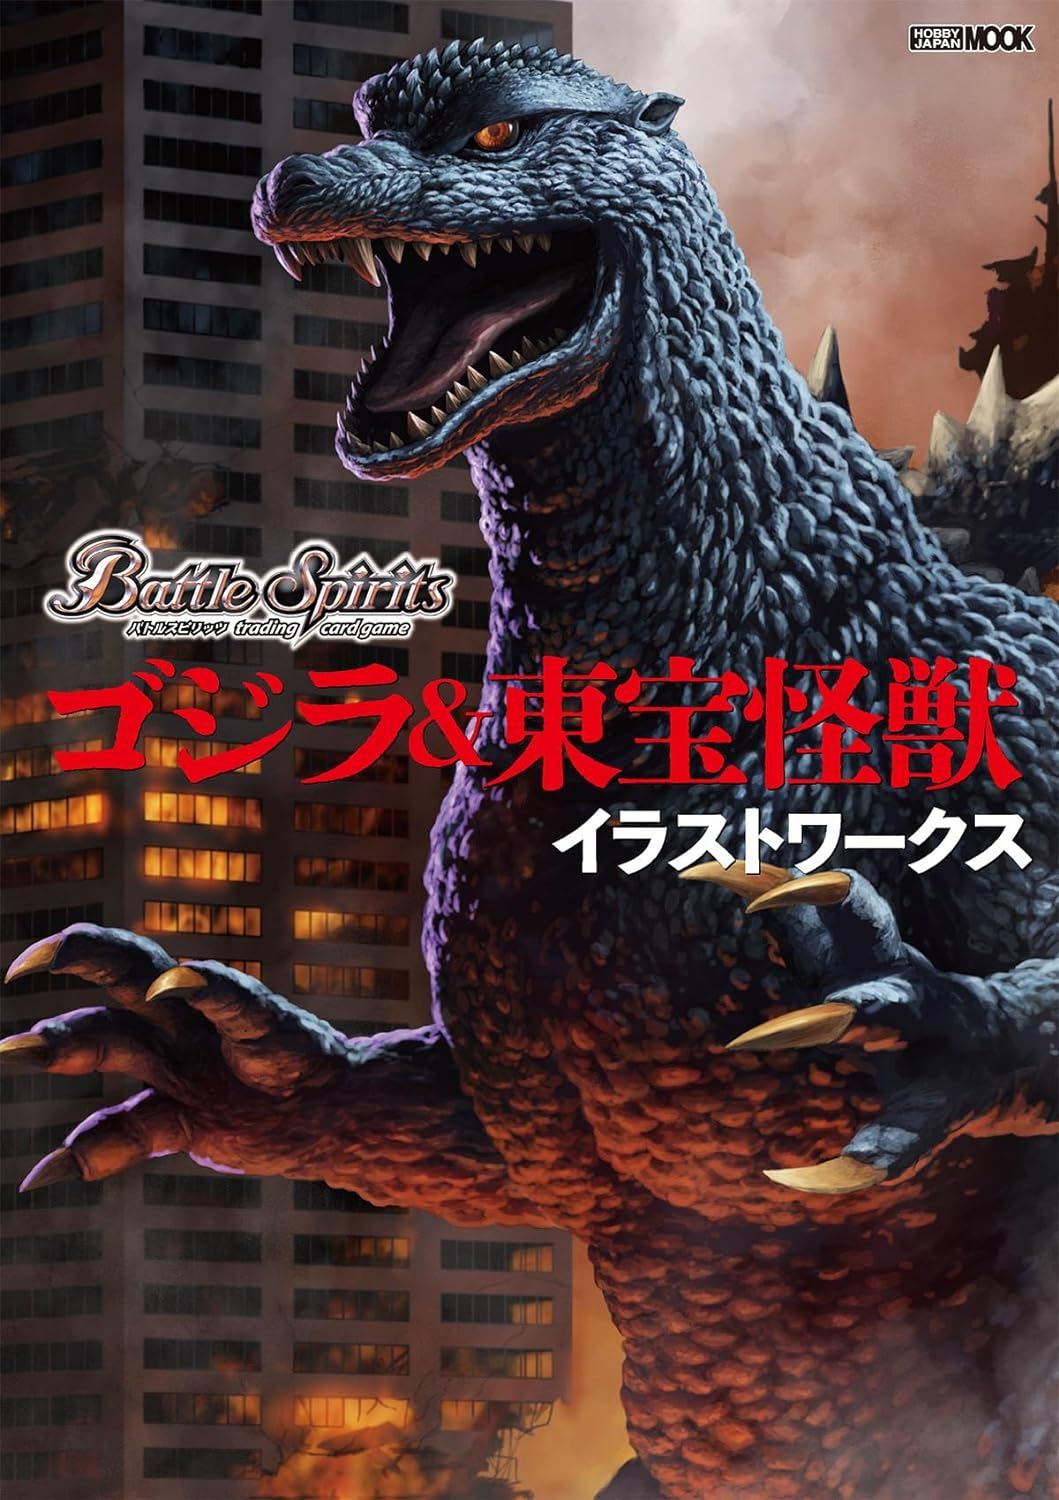 Battle Spirits Godzilla & Toho Kaiju Illustration Works